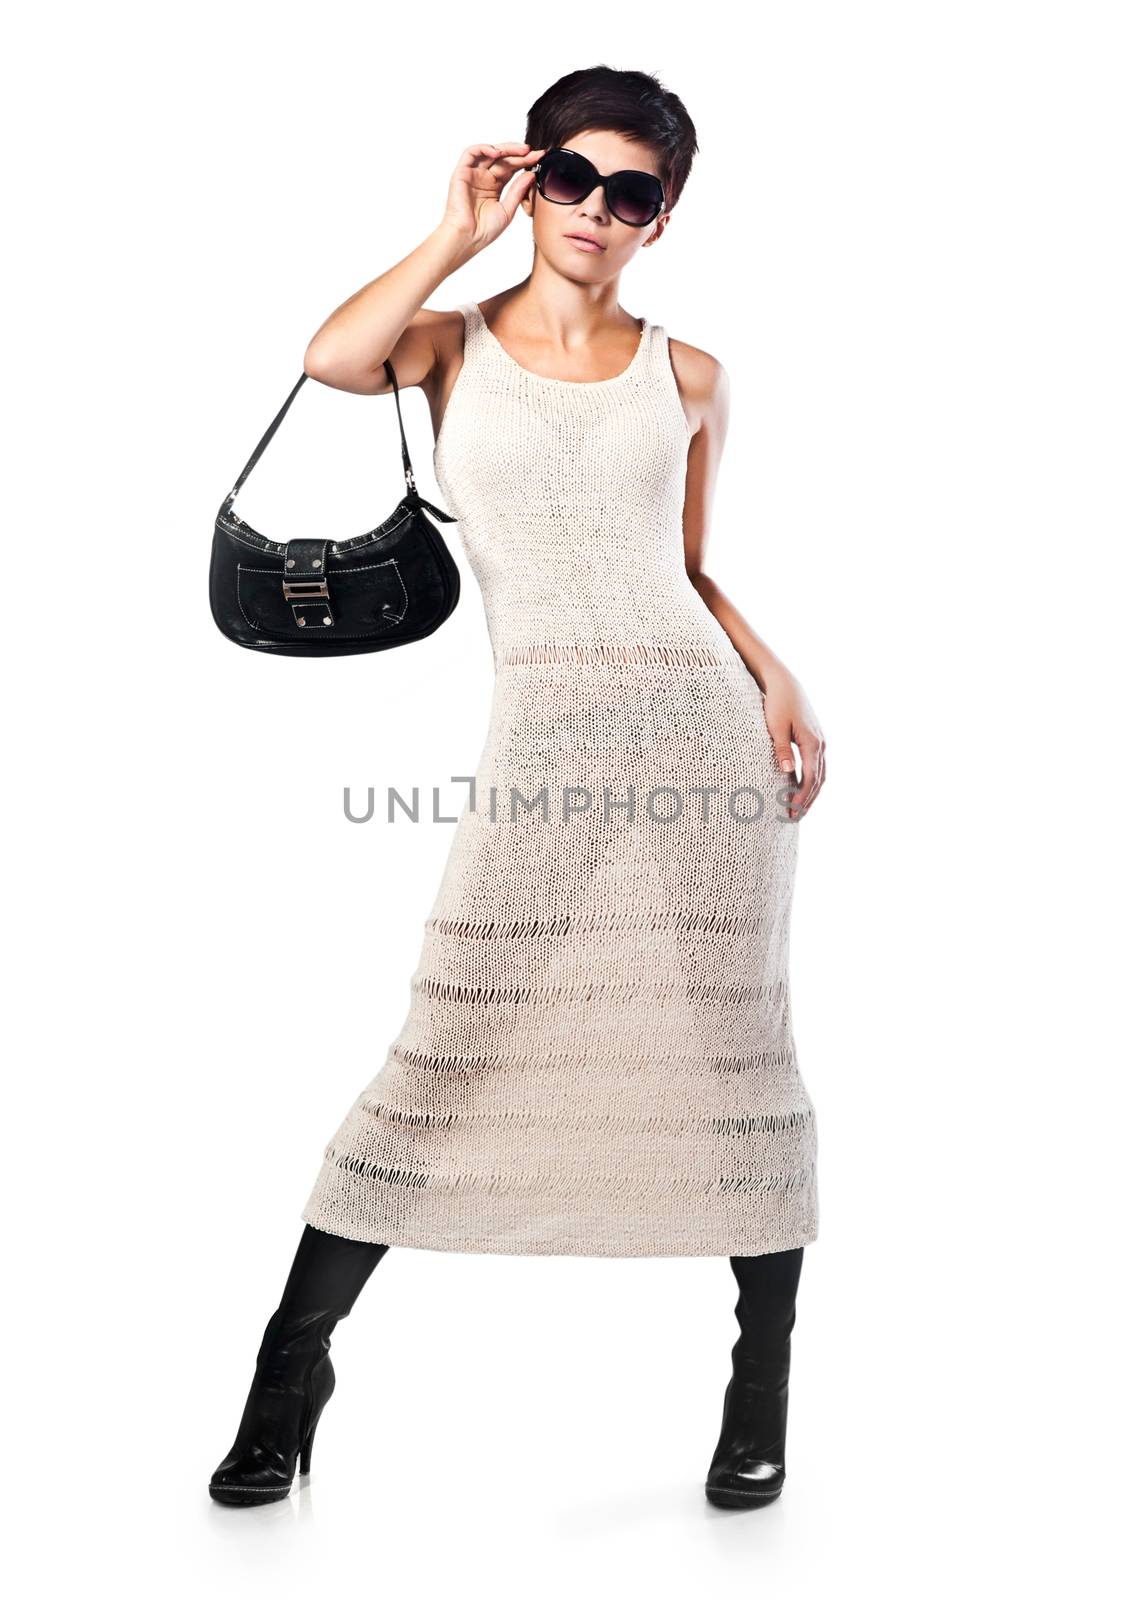 Fashion girl in a beautiful dress by GekaSkr